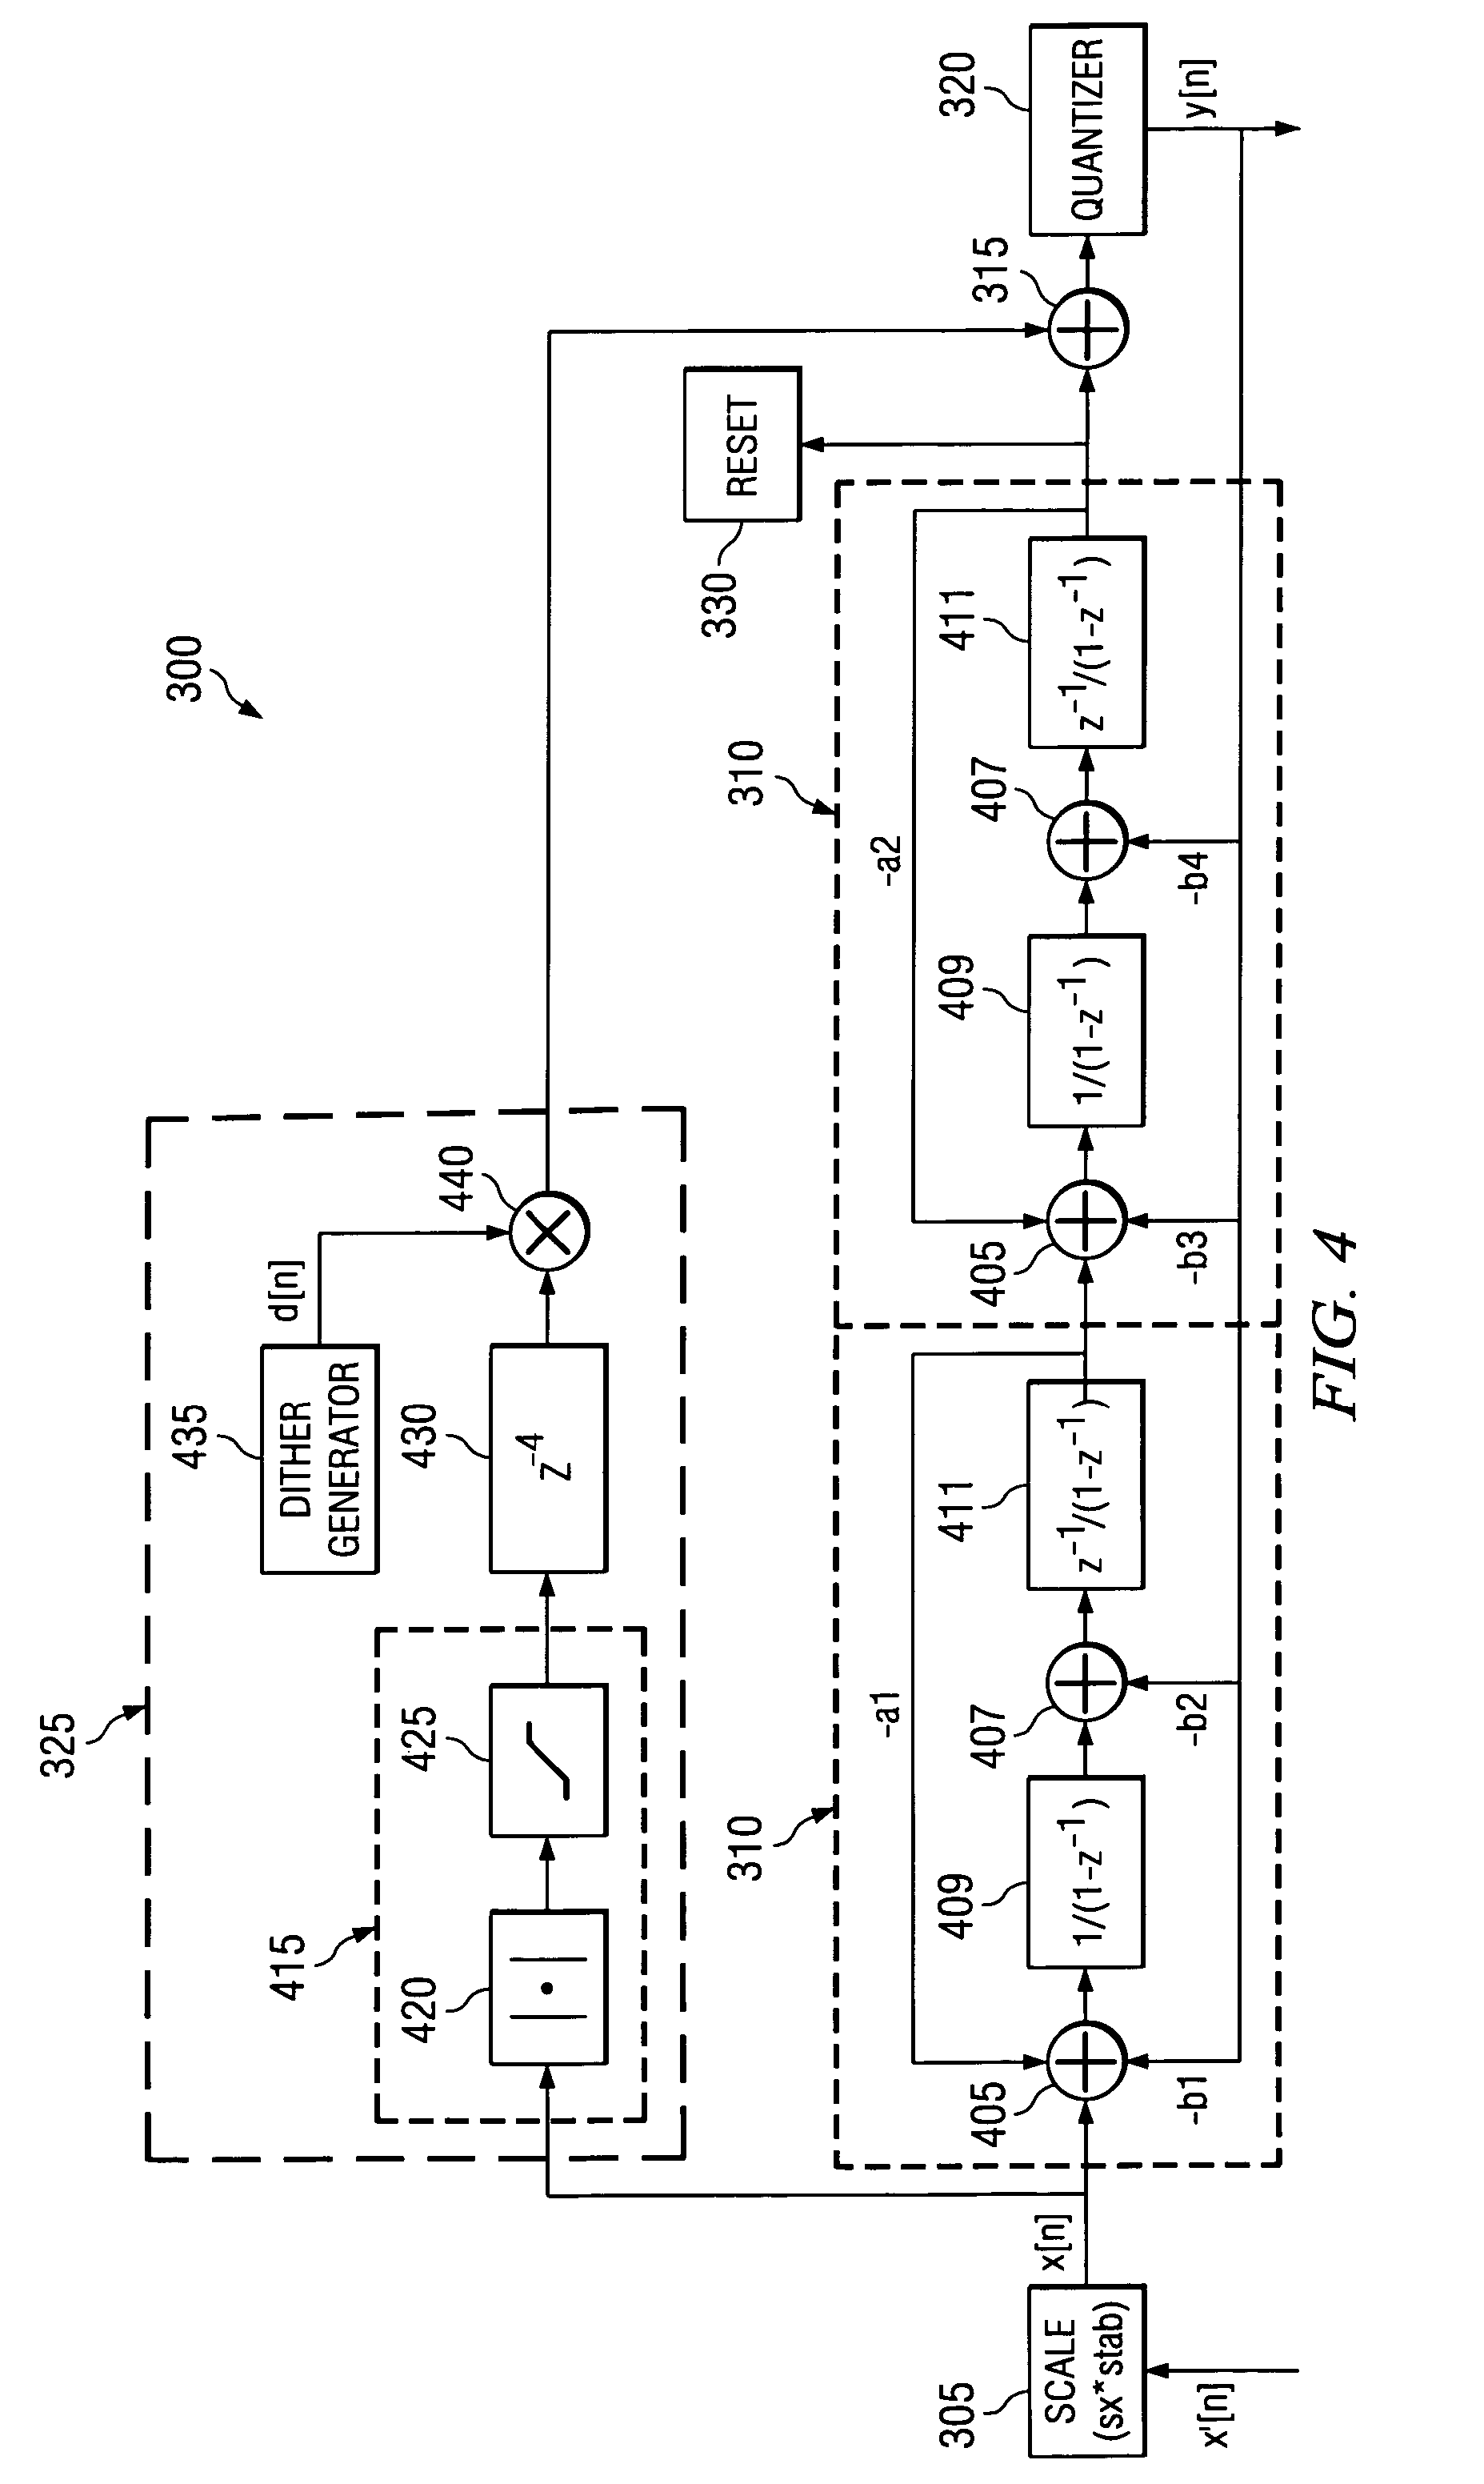 Method and circuit for multi-standard sigma-delta modulator